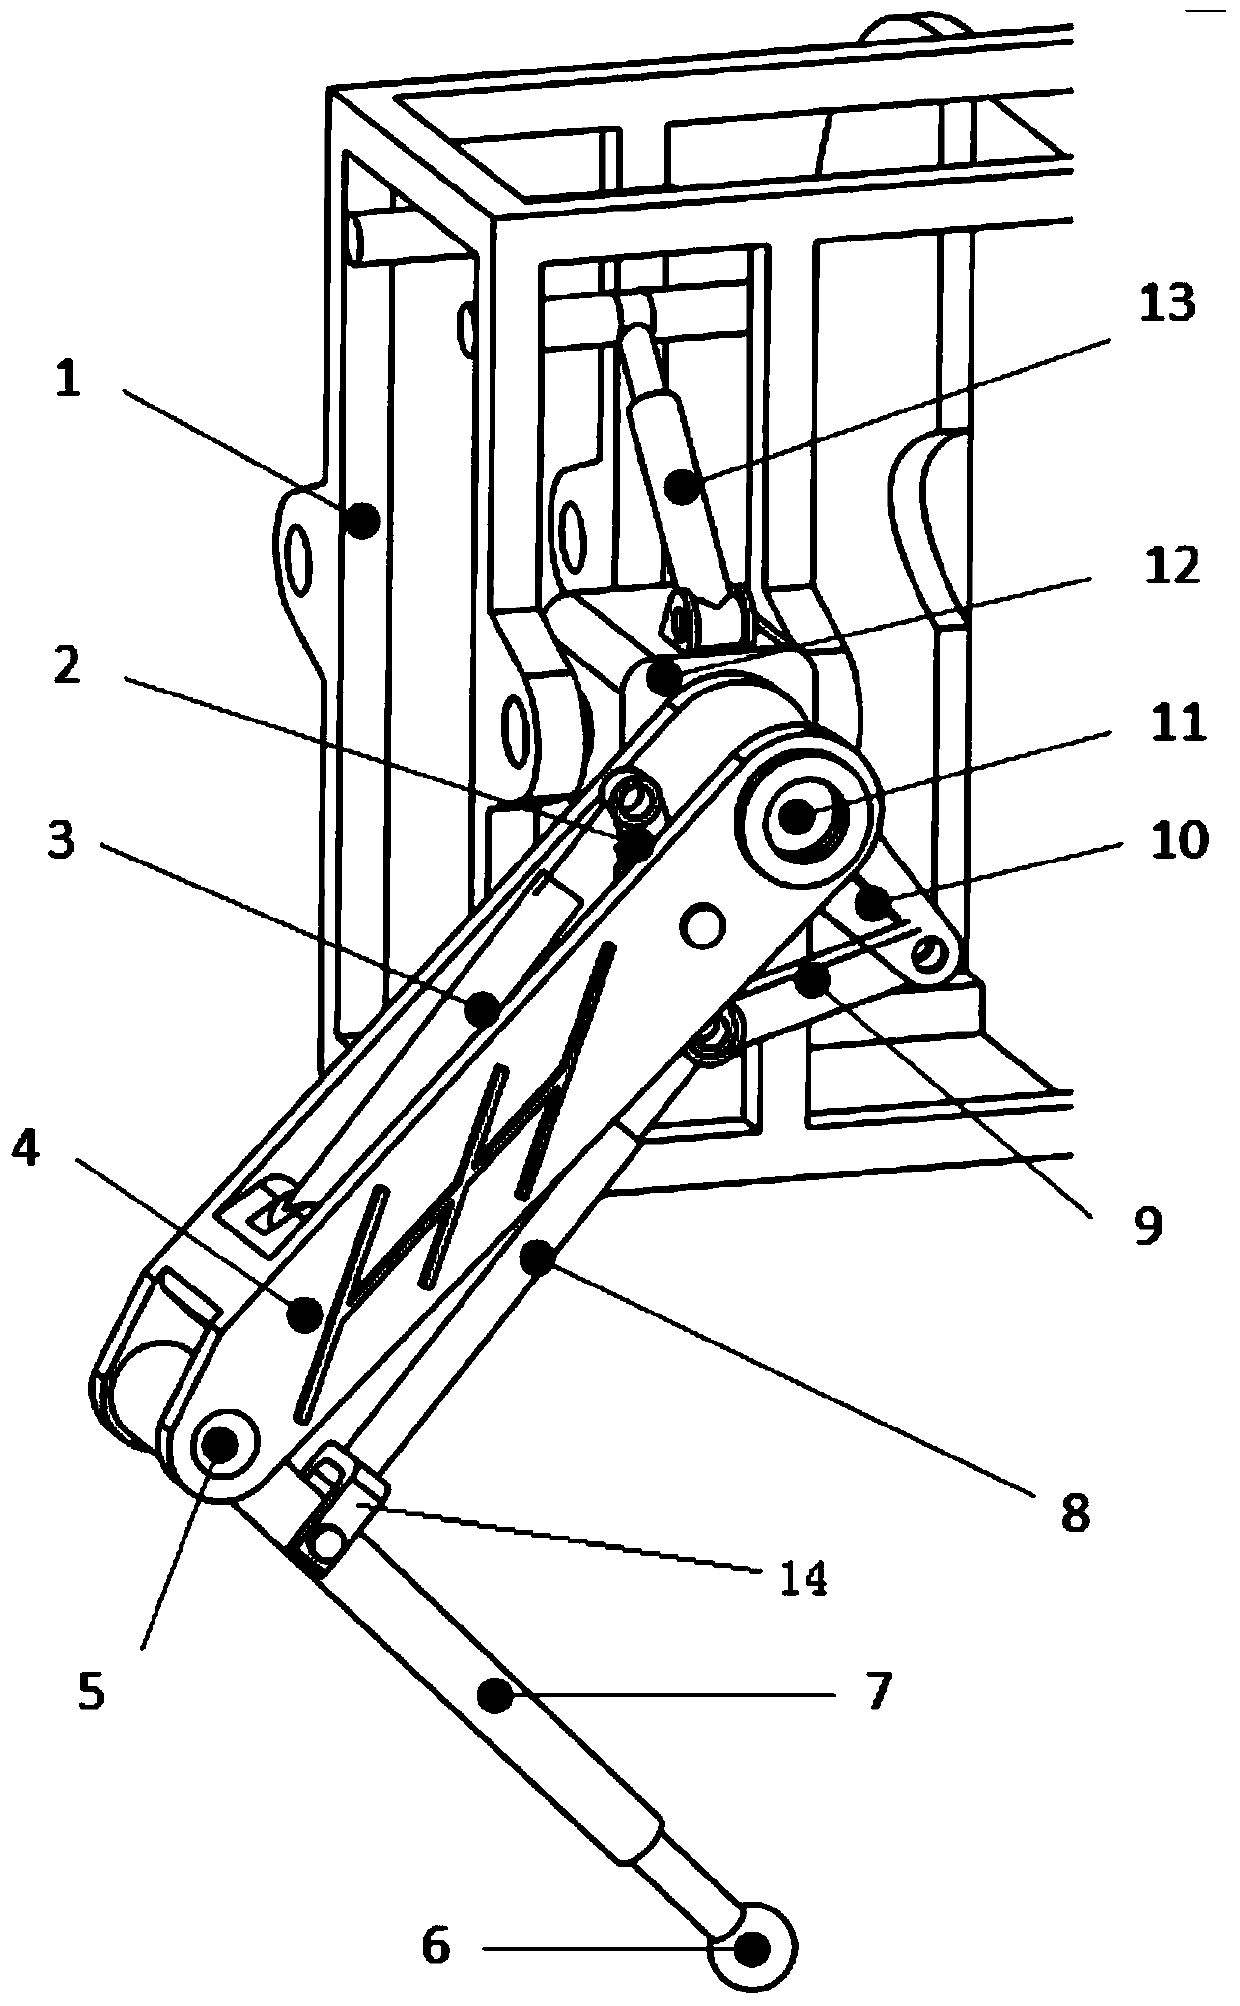 Leg linkage mechanism of quadruped robot